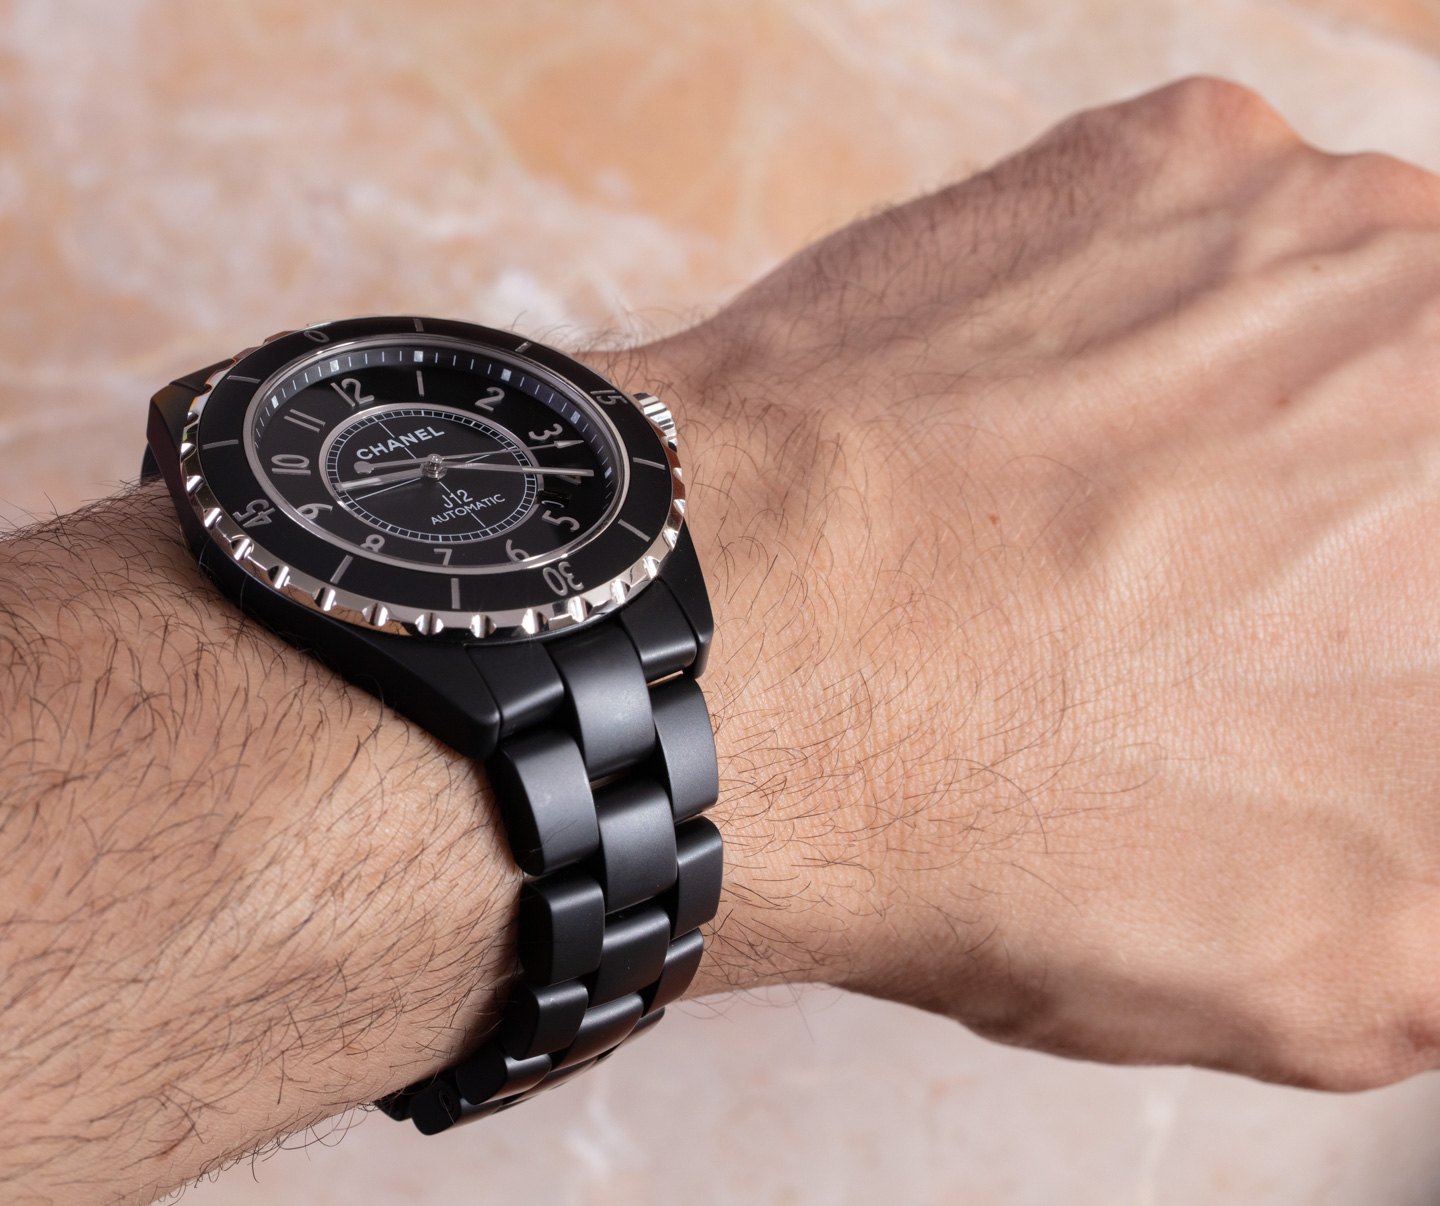 No Longer Made: Chanel J12 H3131 Watch | aBlogtoWatch